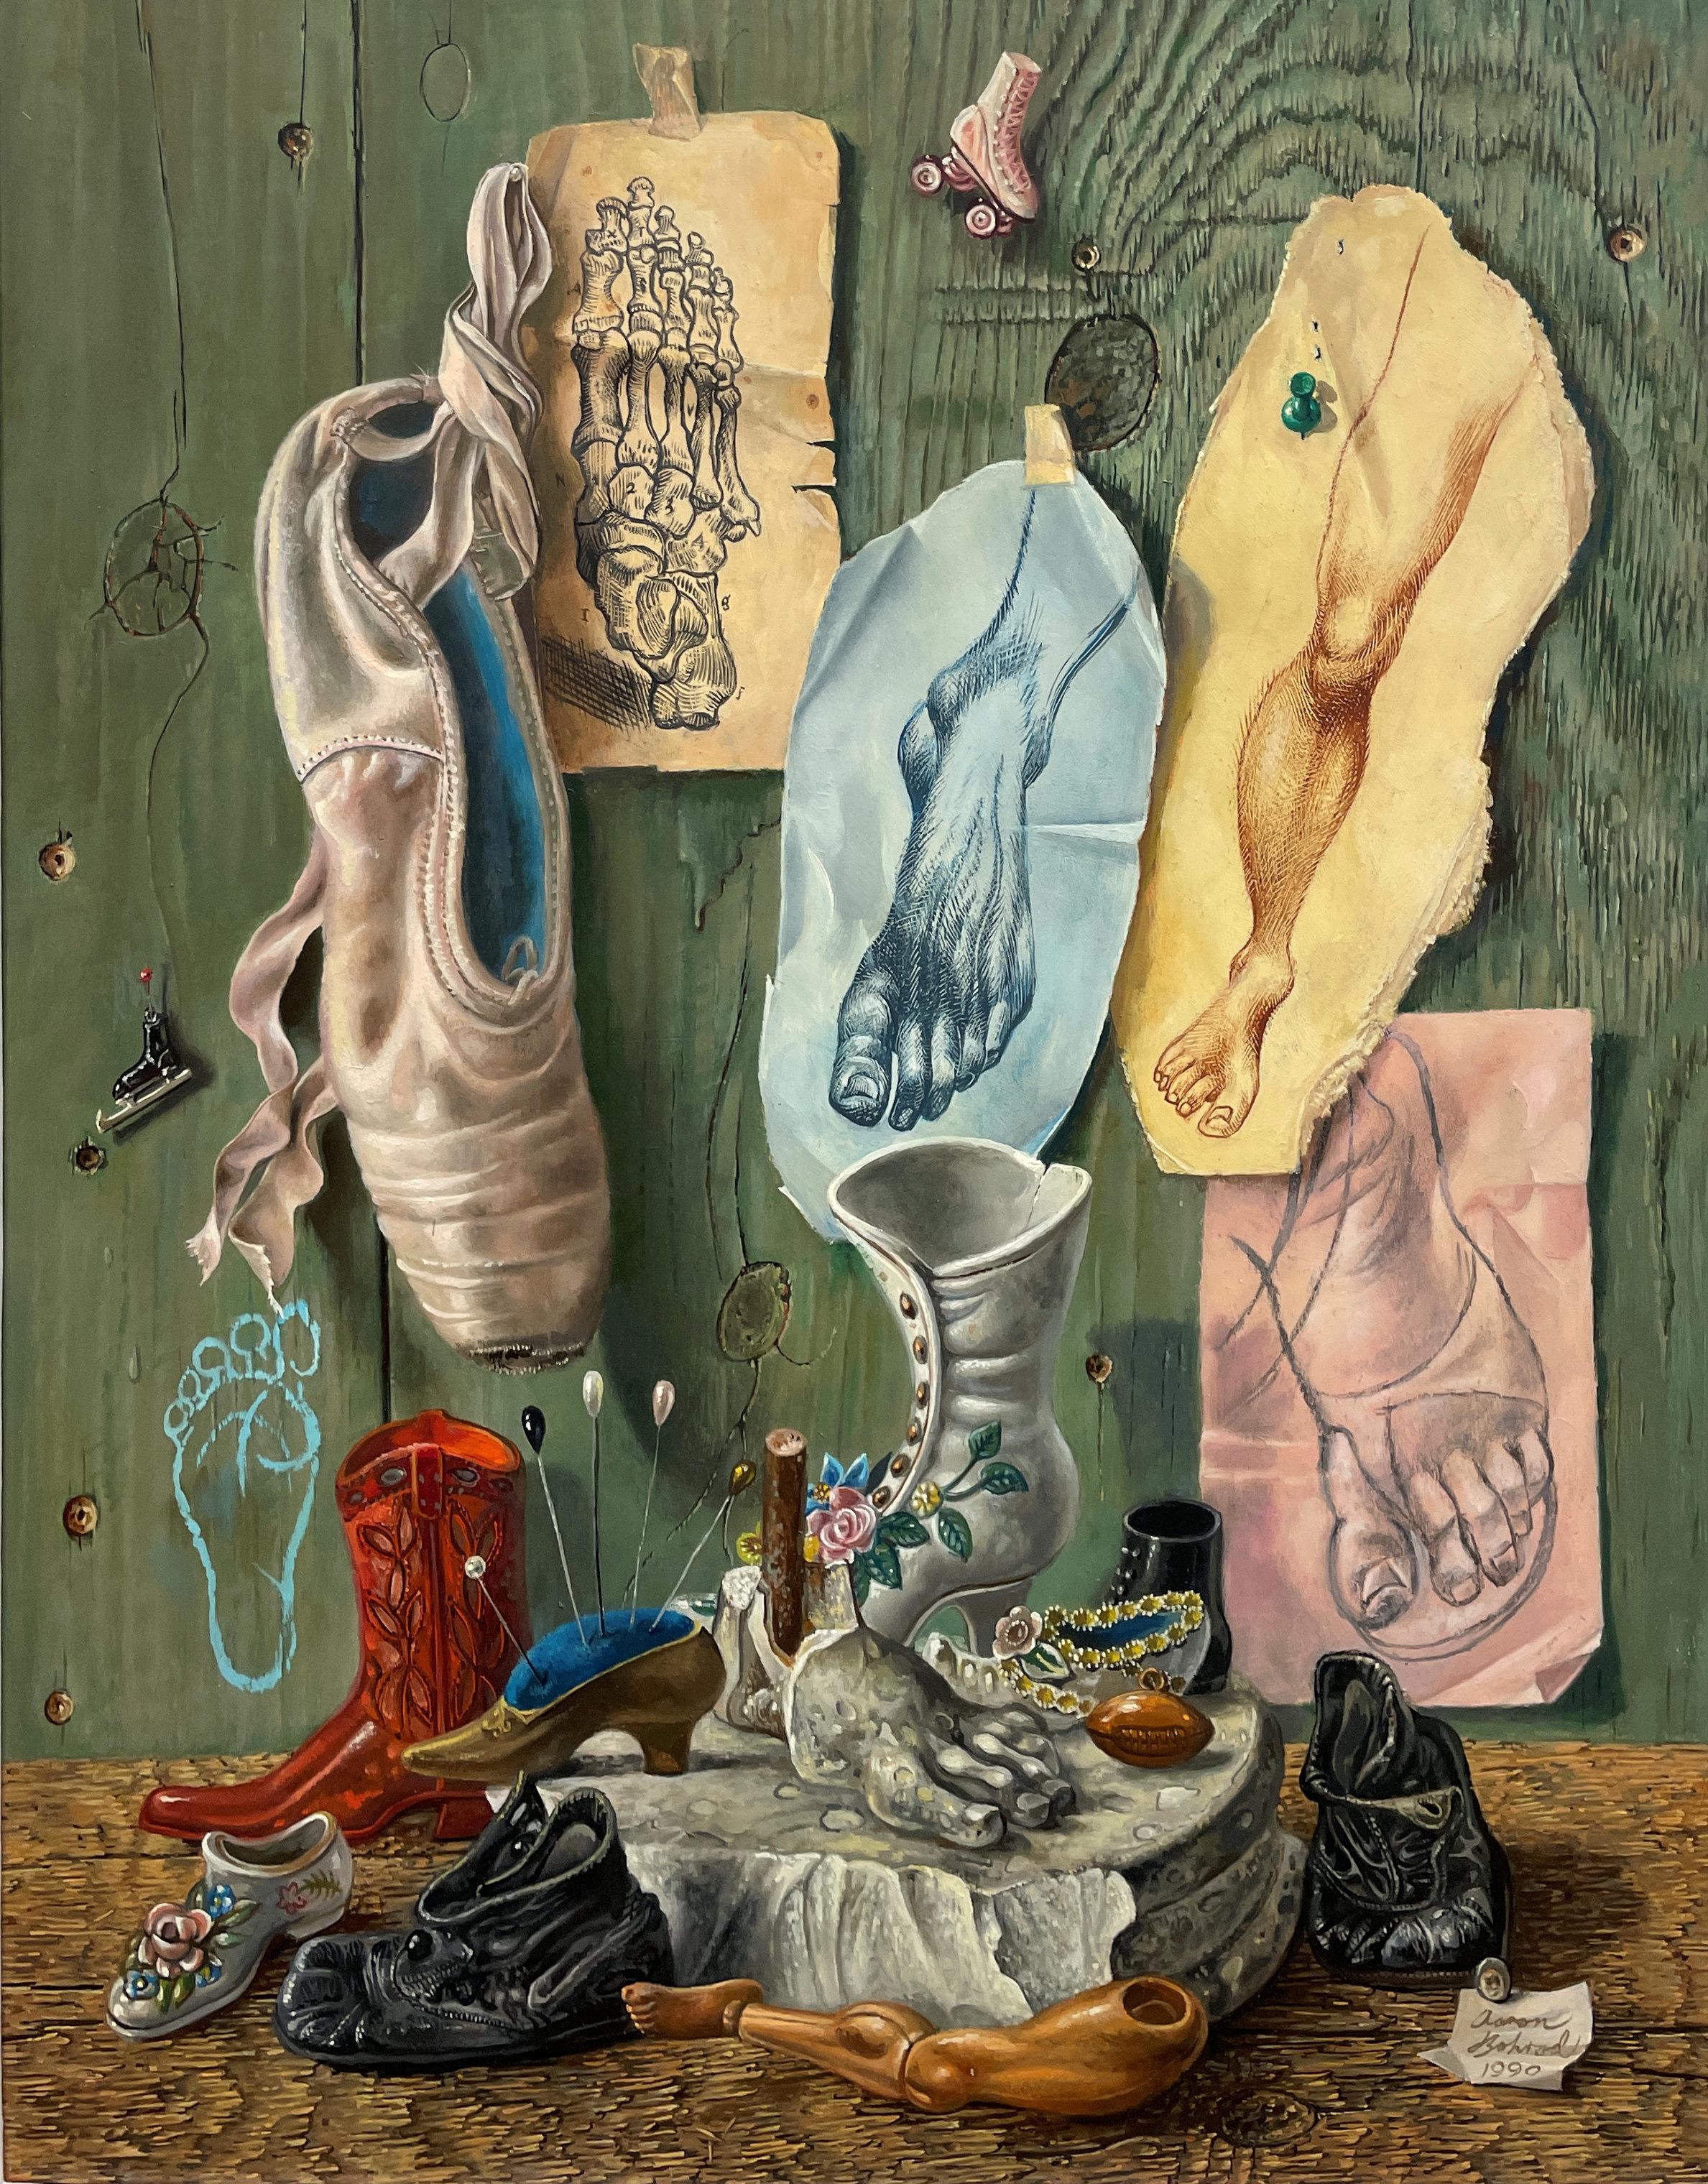 "Footnotes" Aaron Bohrod, Pun Humor, Shoes, Realist Trompe L'oeil Still Life